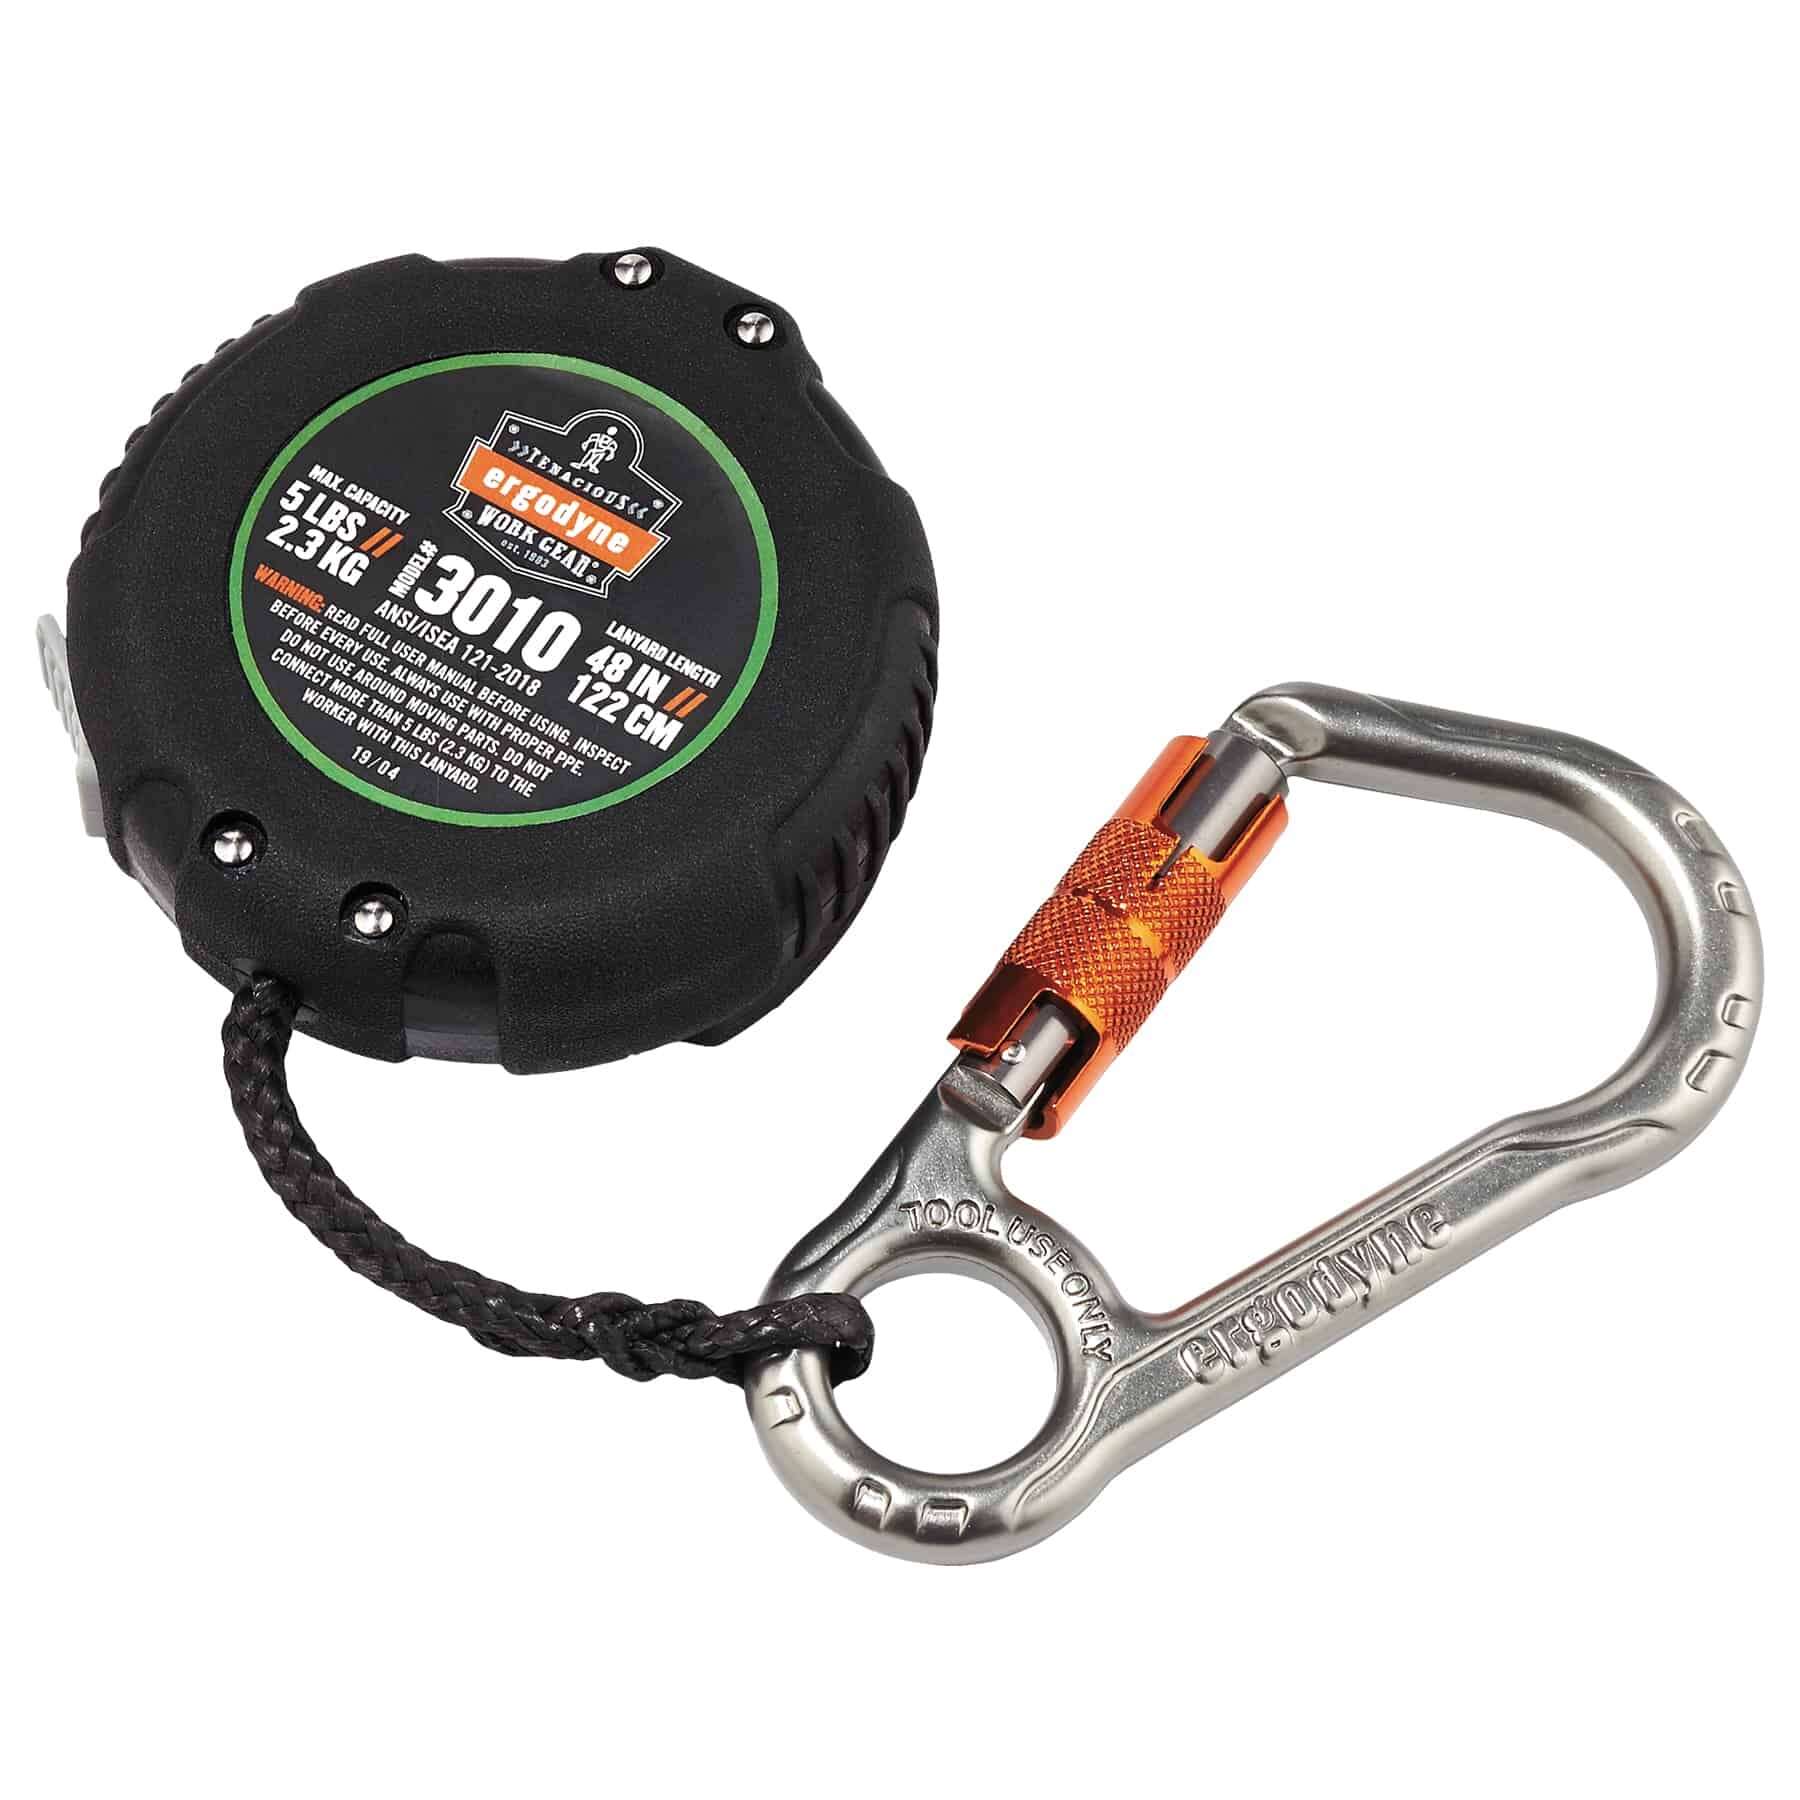 belt loop clip